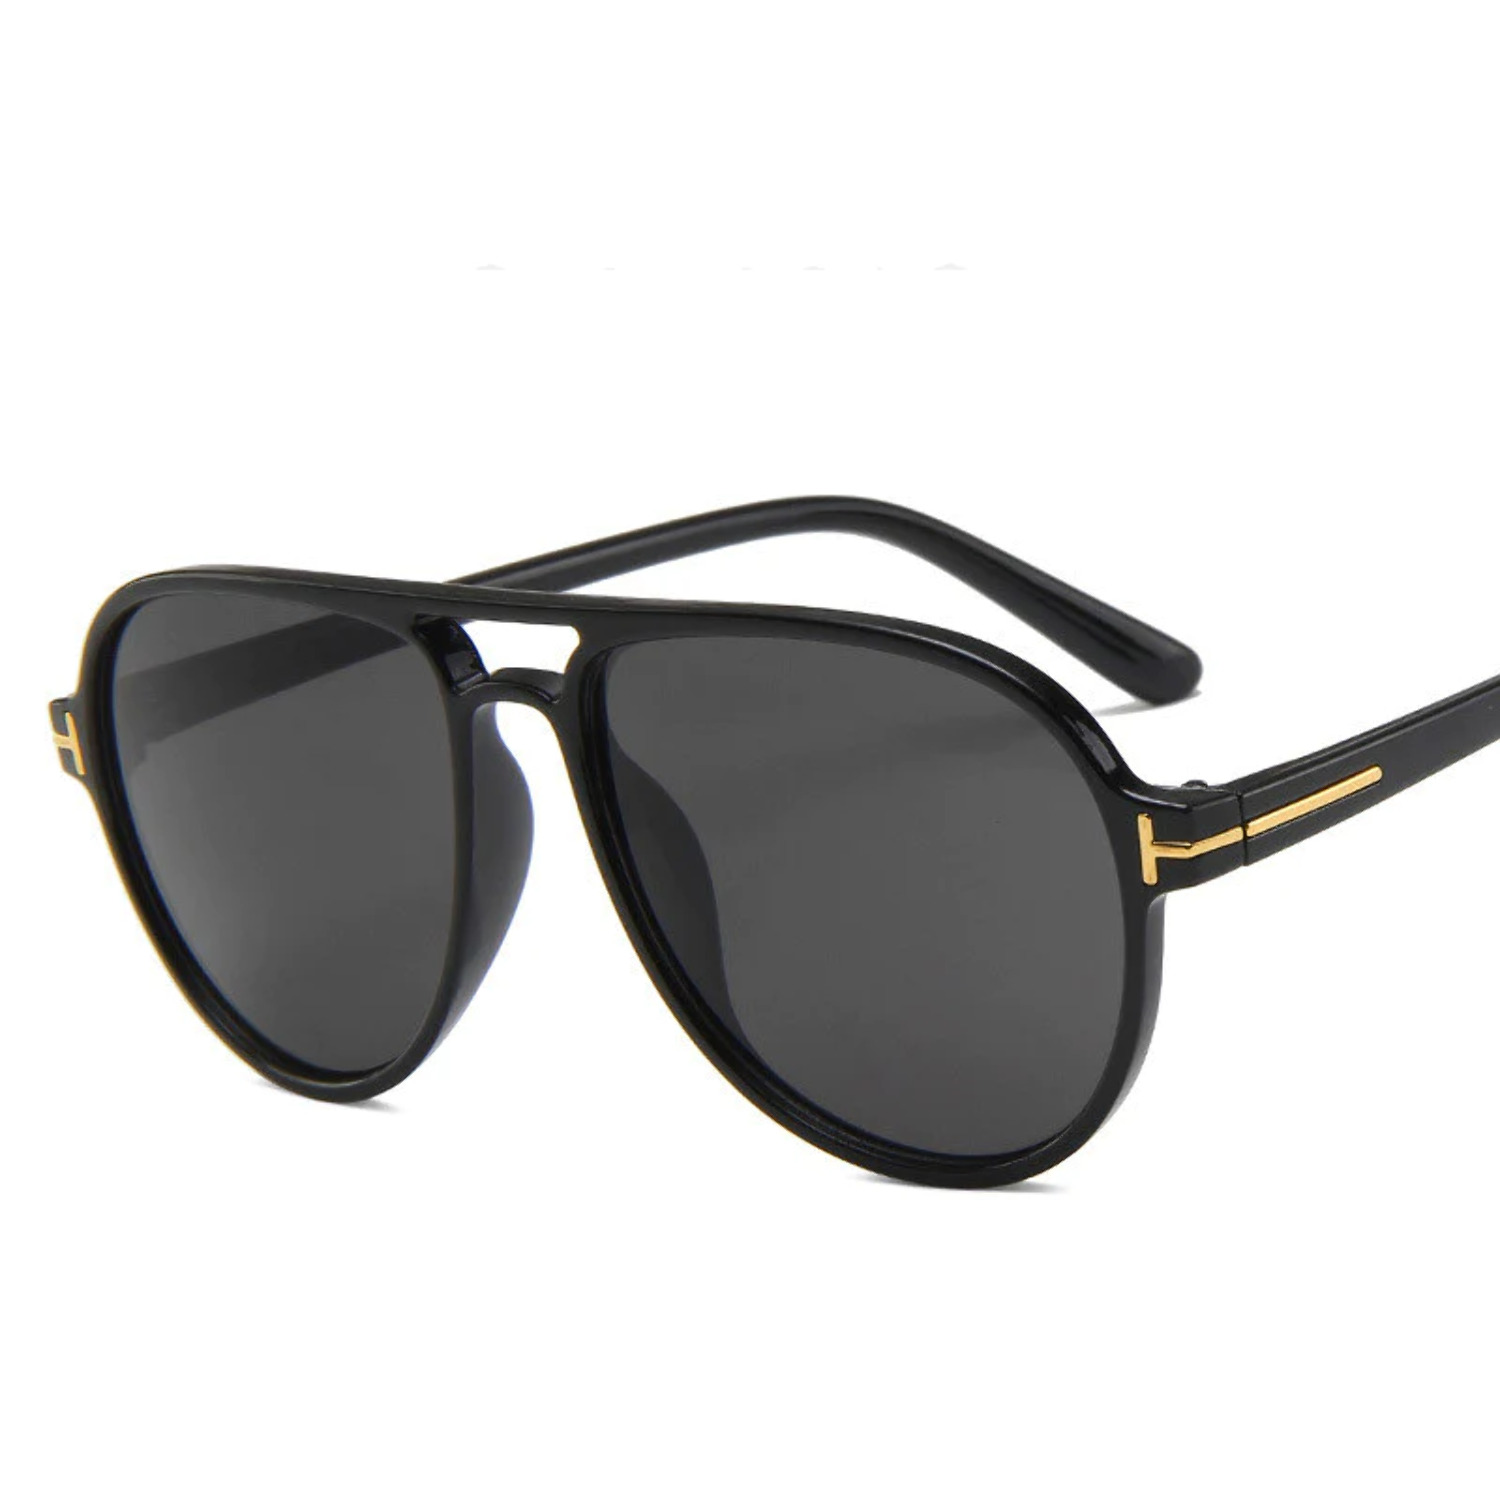 Big Frame Face-lift Trend Sunglasses Personality Retro Sunglasses ...